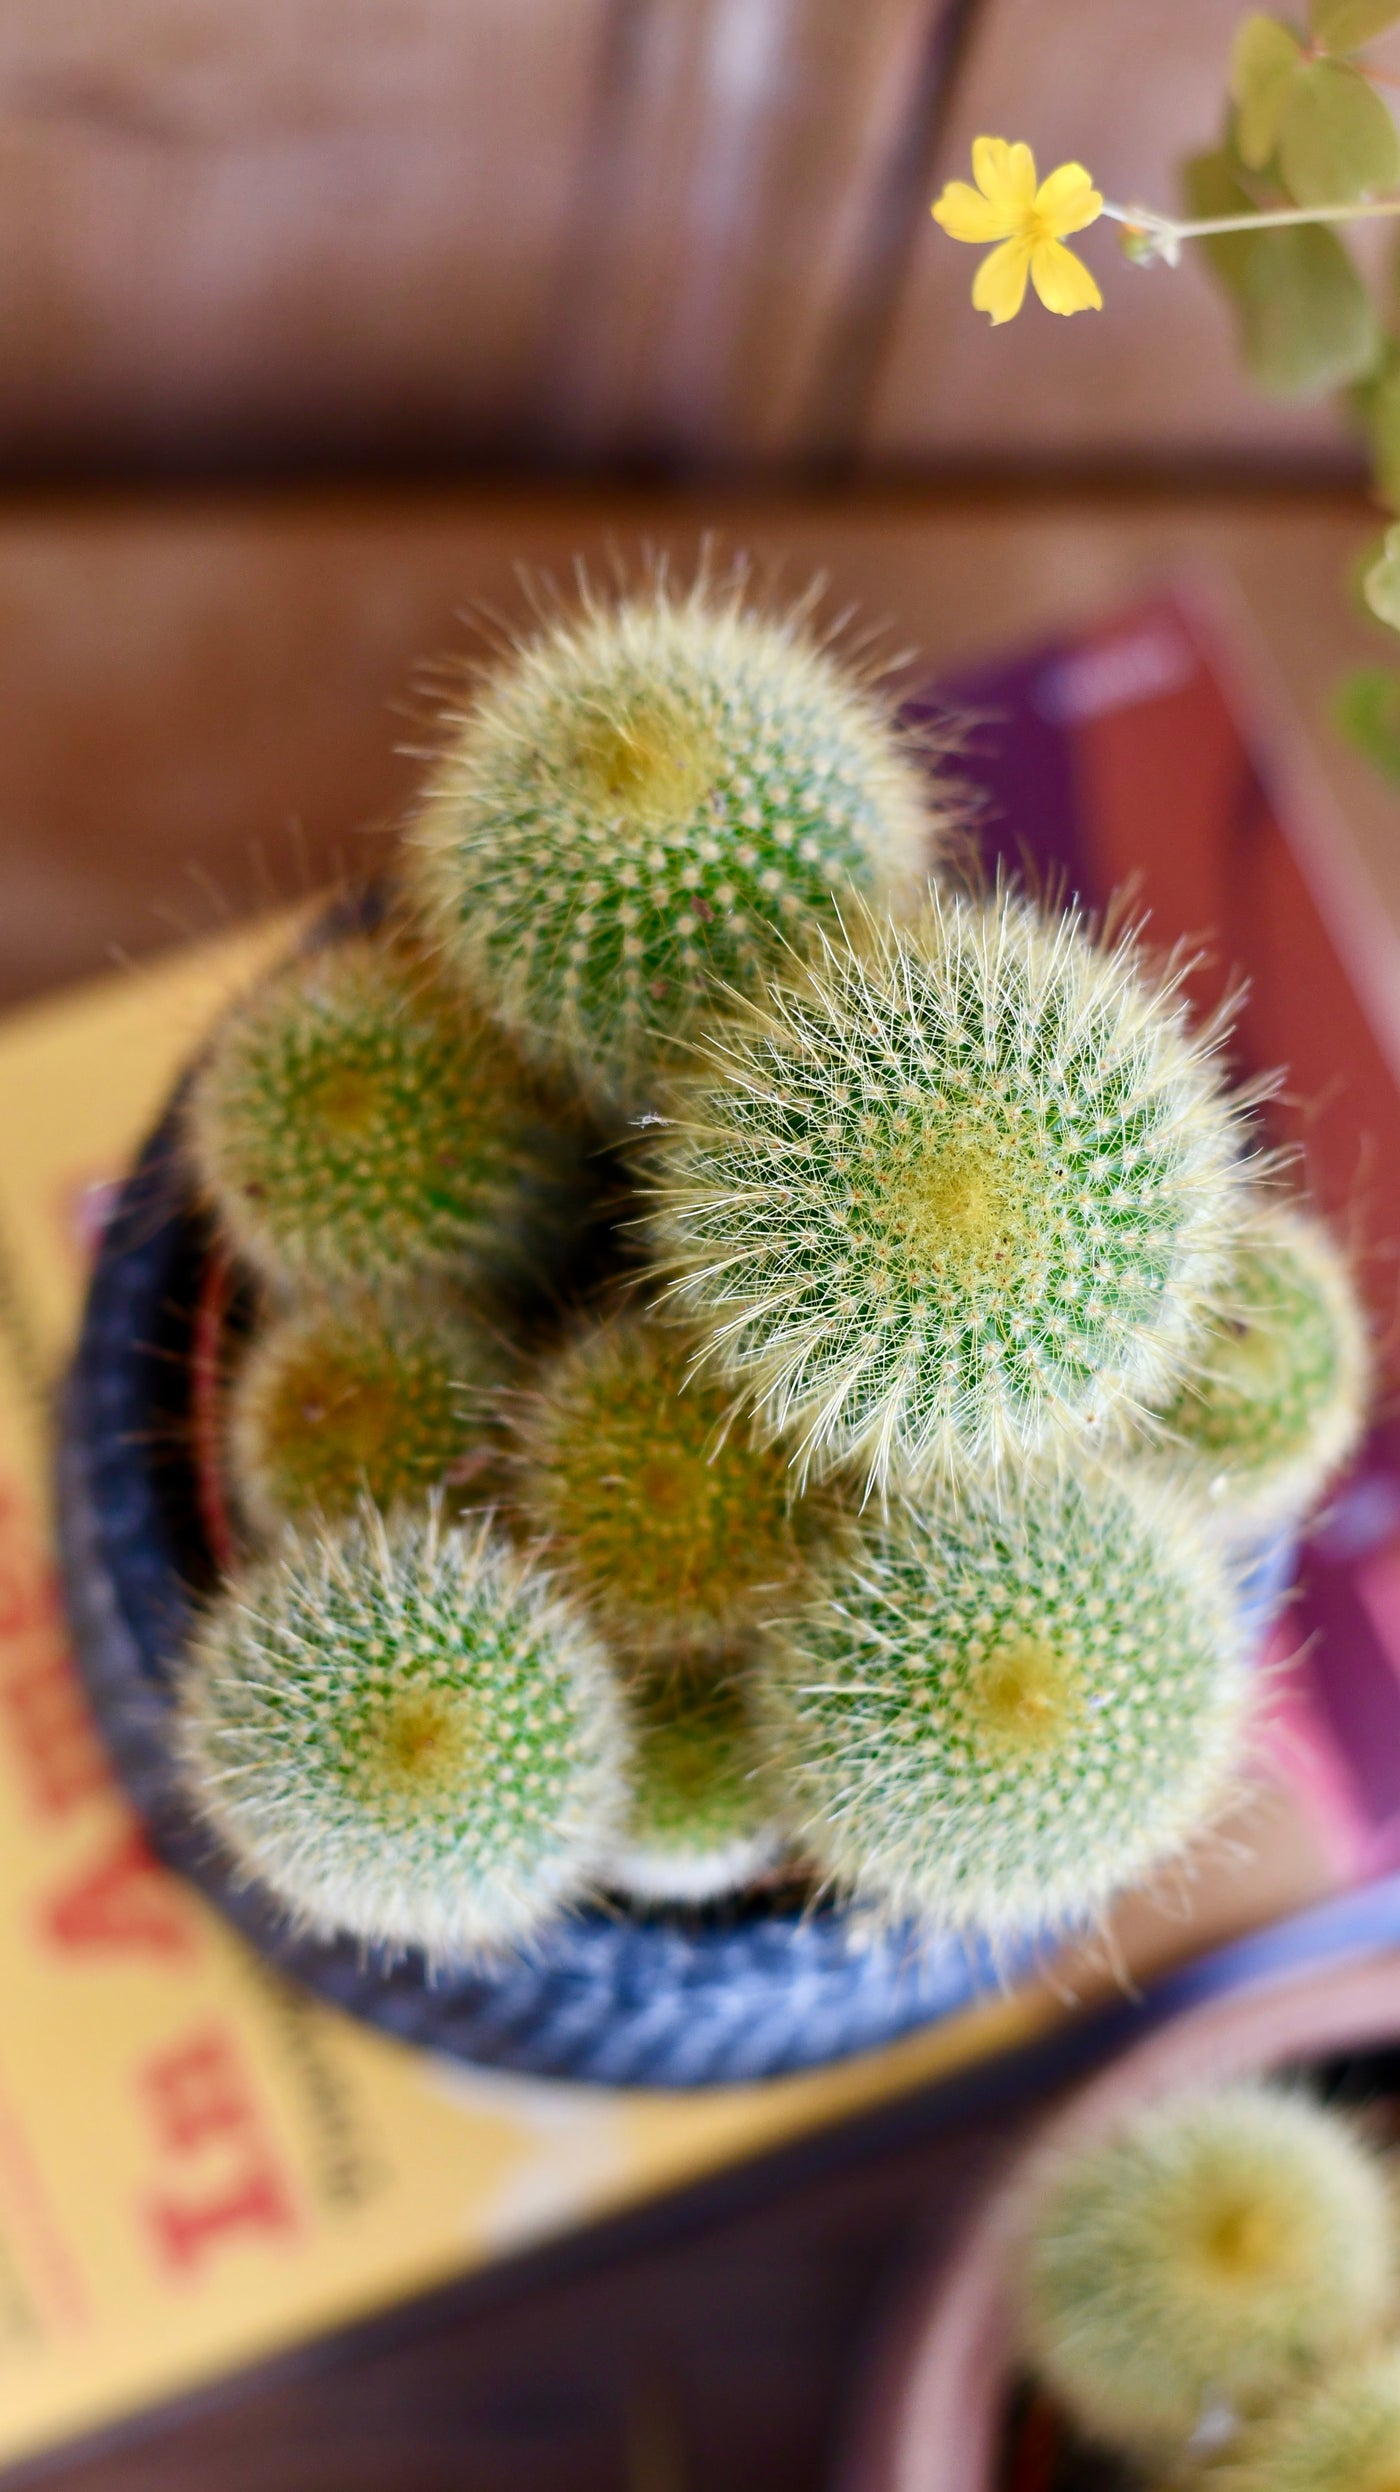 Notocactus leninghausii "Golden Ball Cactus"